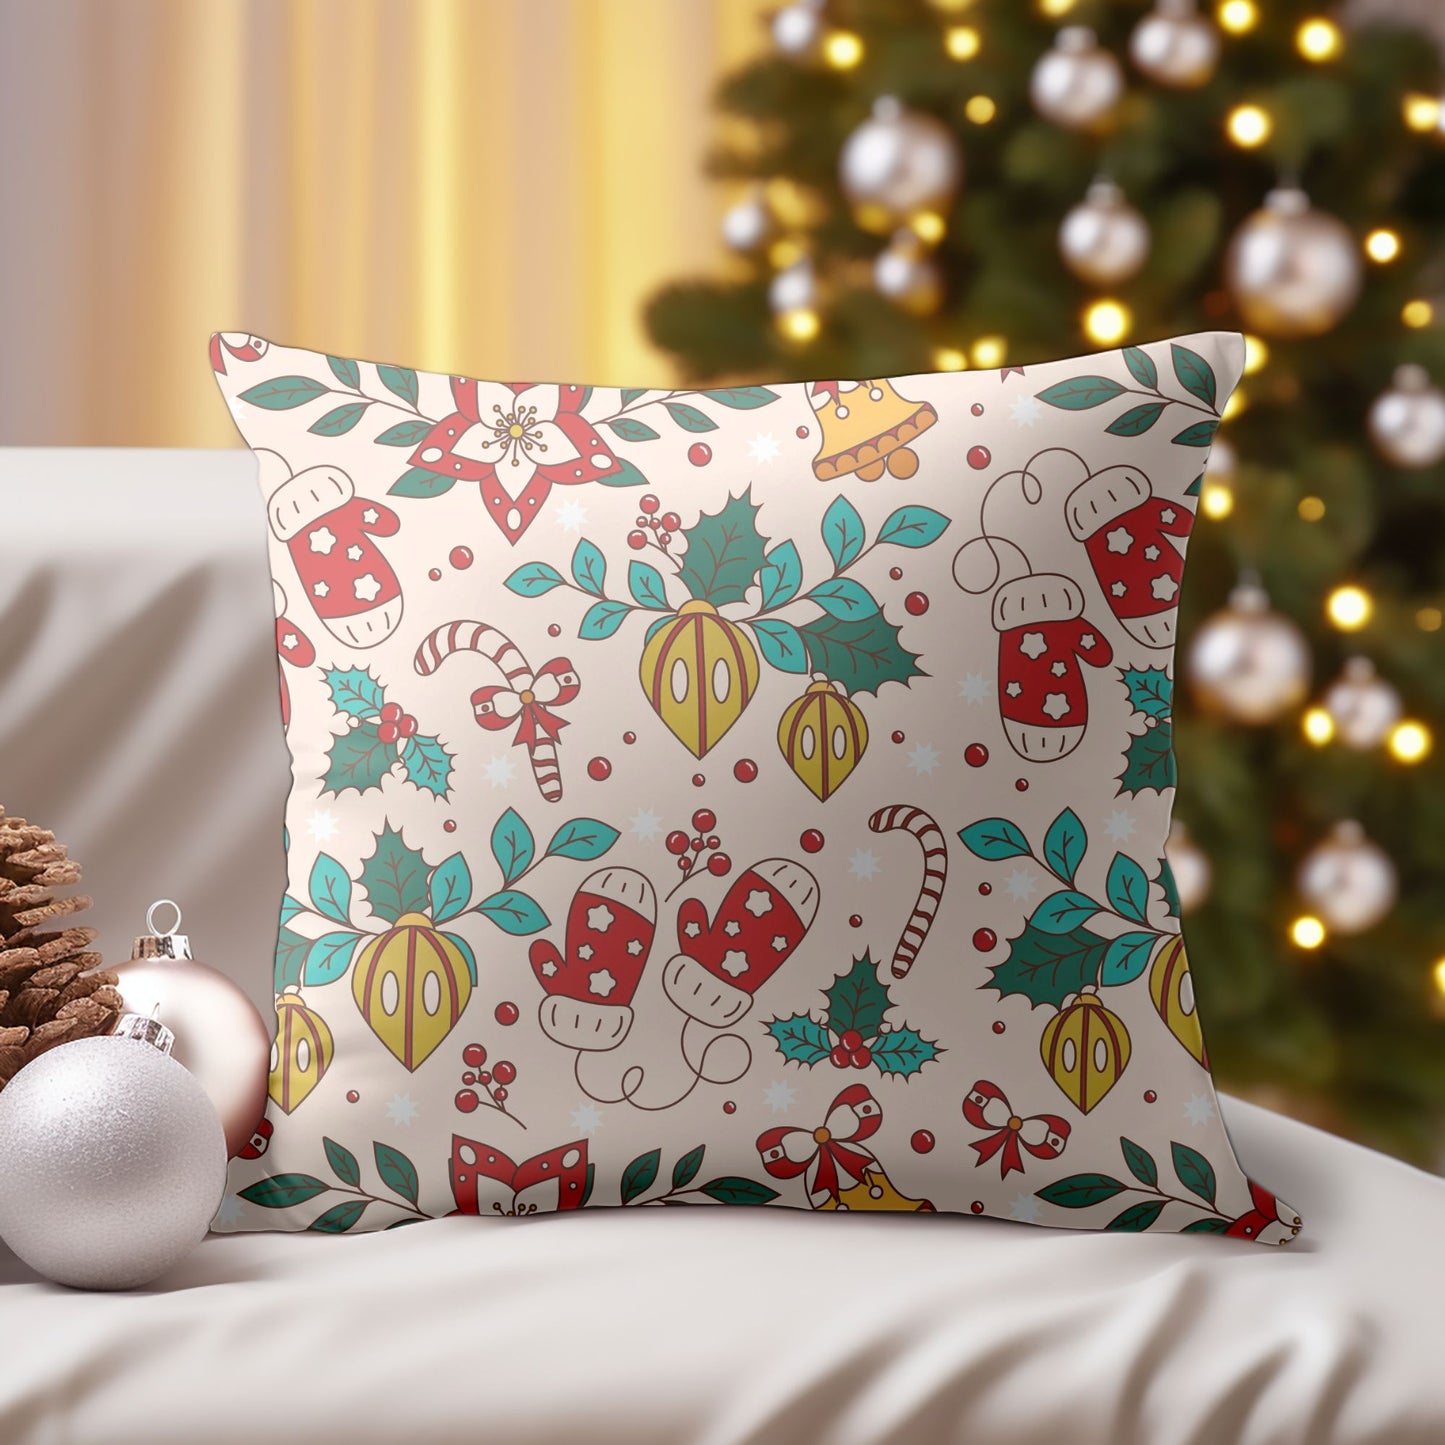 Joyful Christmas Decorative Pillow for Your Home